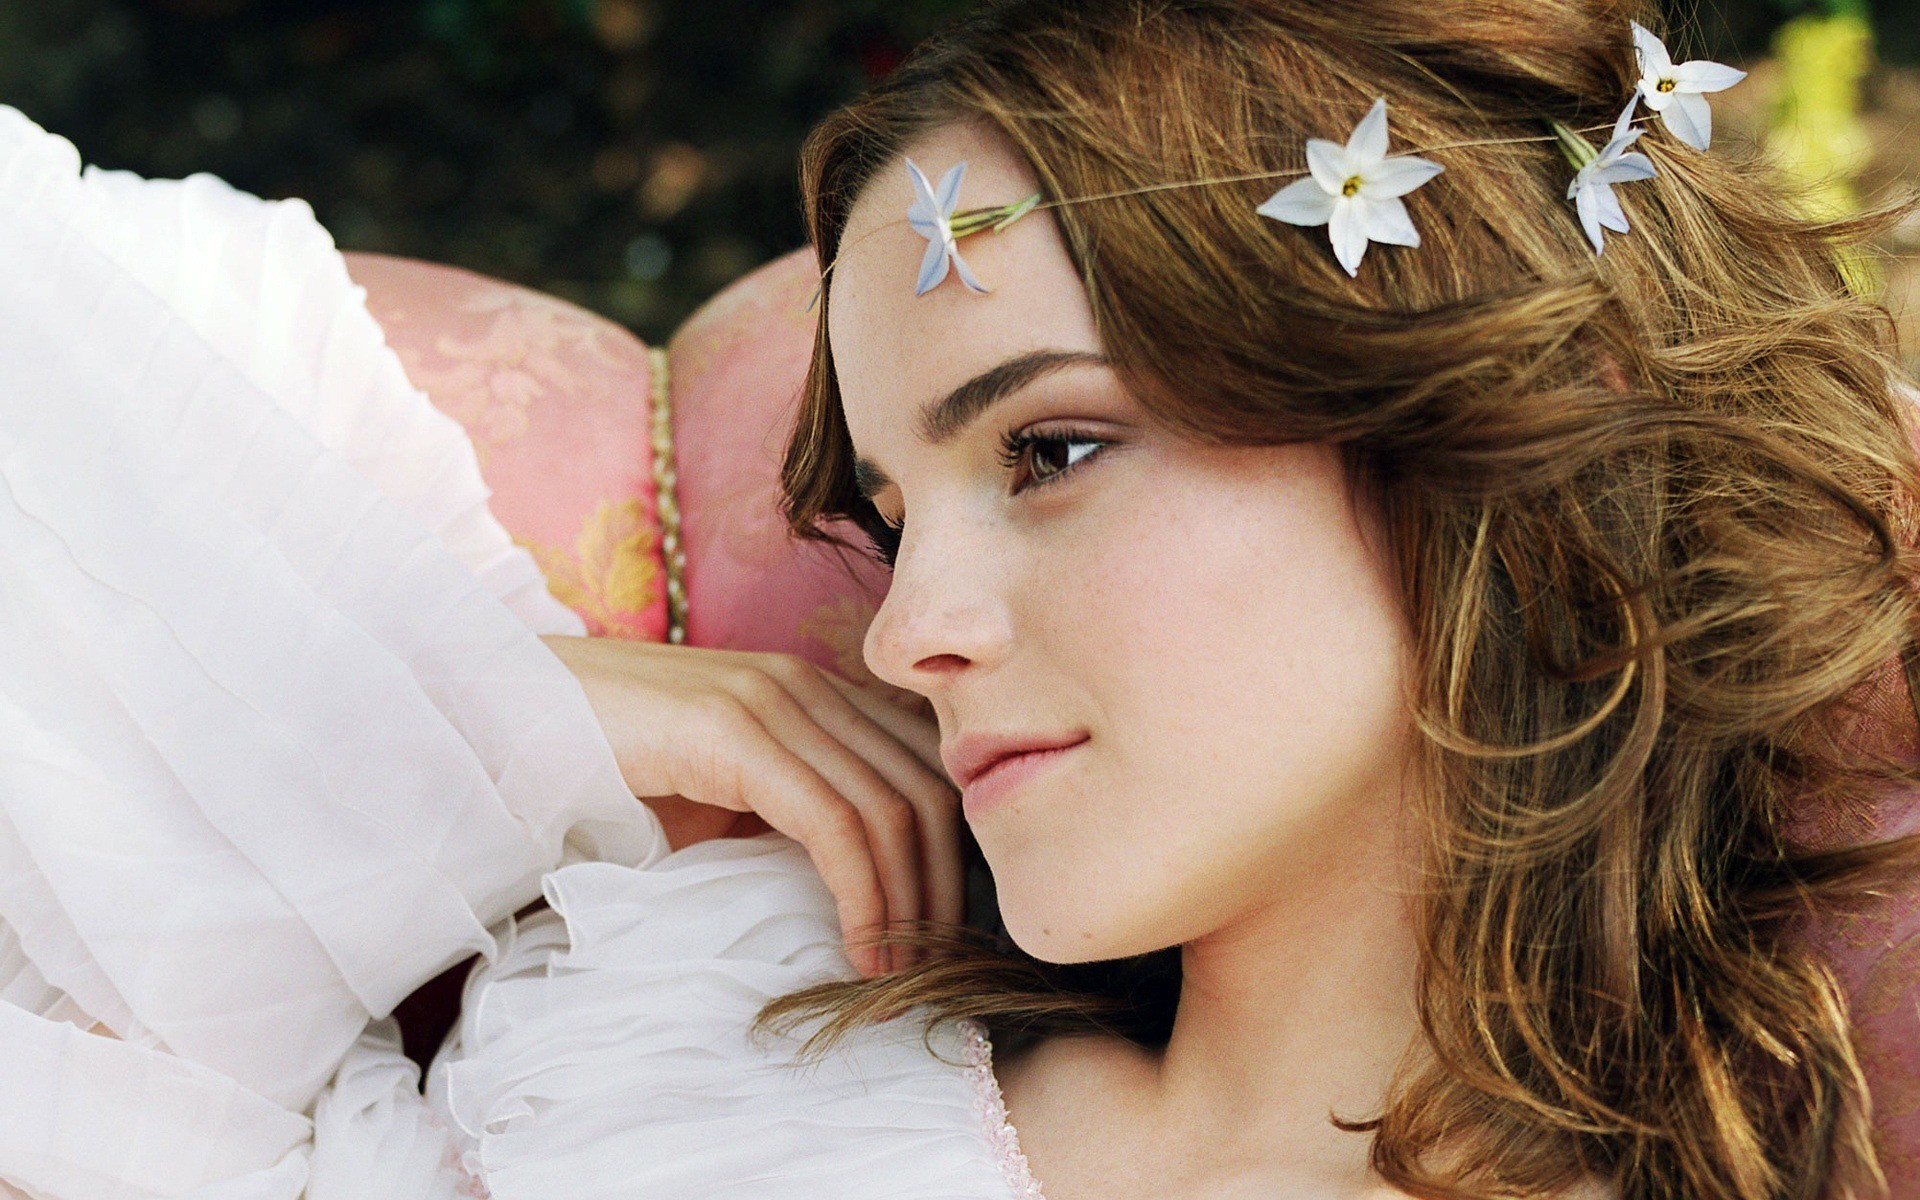 People 1920x1200 Emma Watson women brunette actress British women face profile looking away flower crown white dress